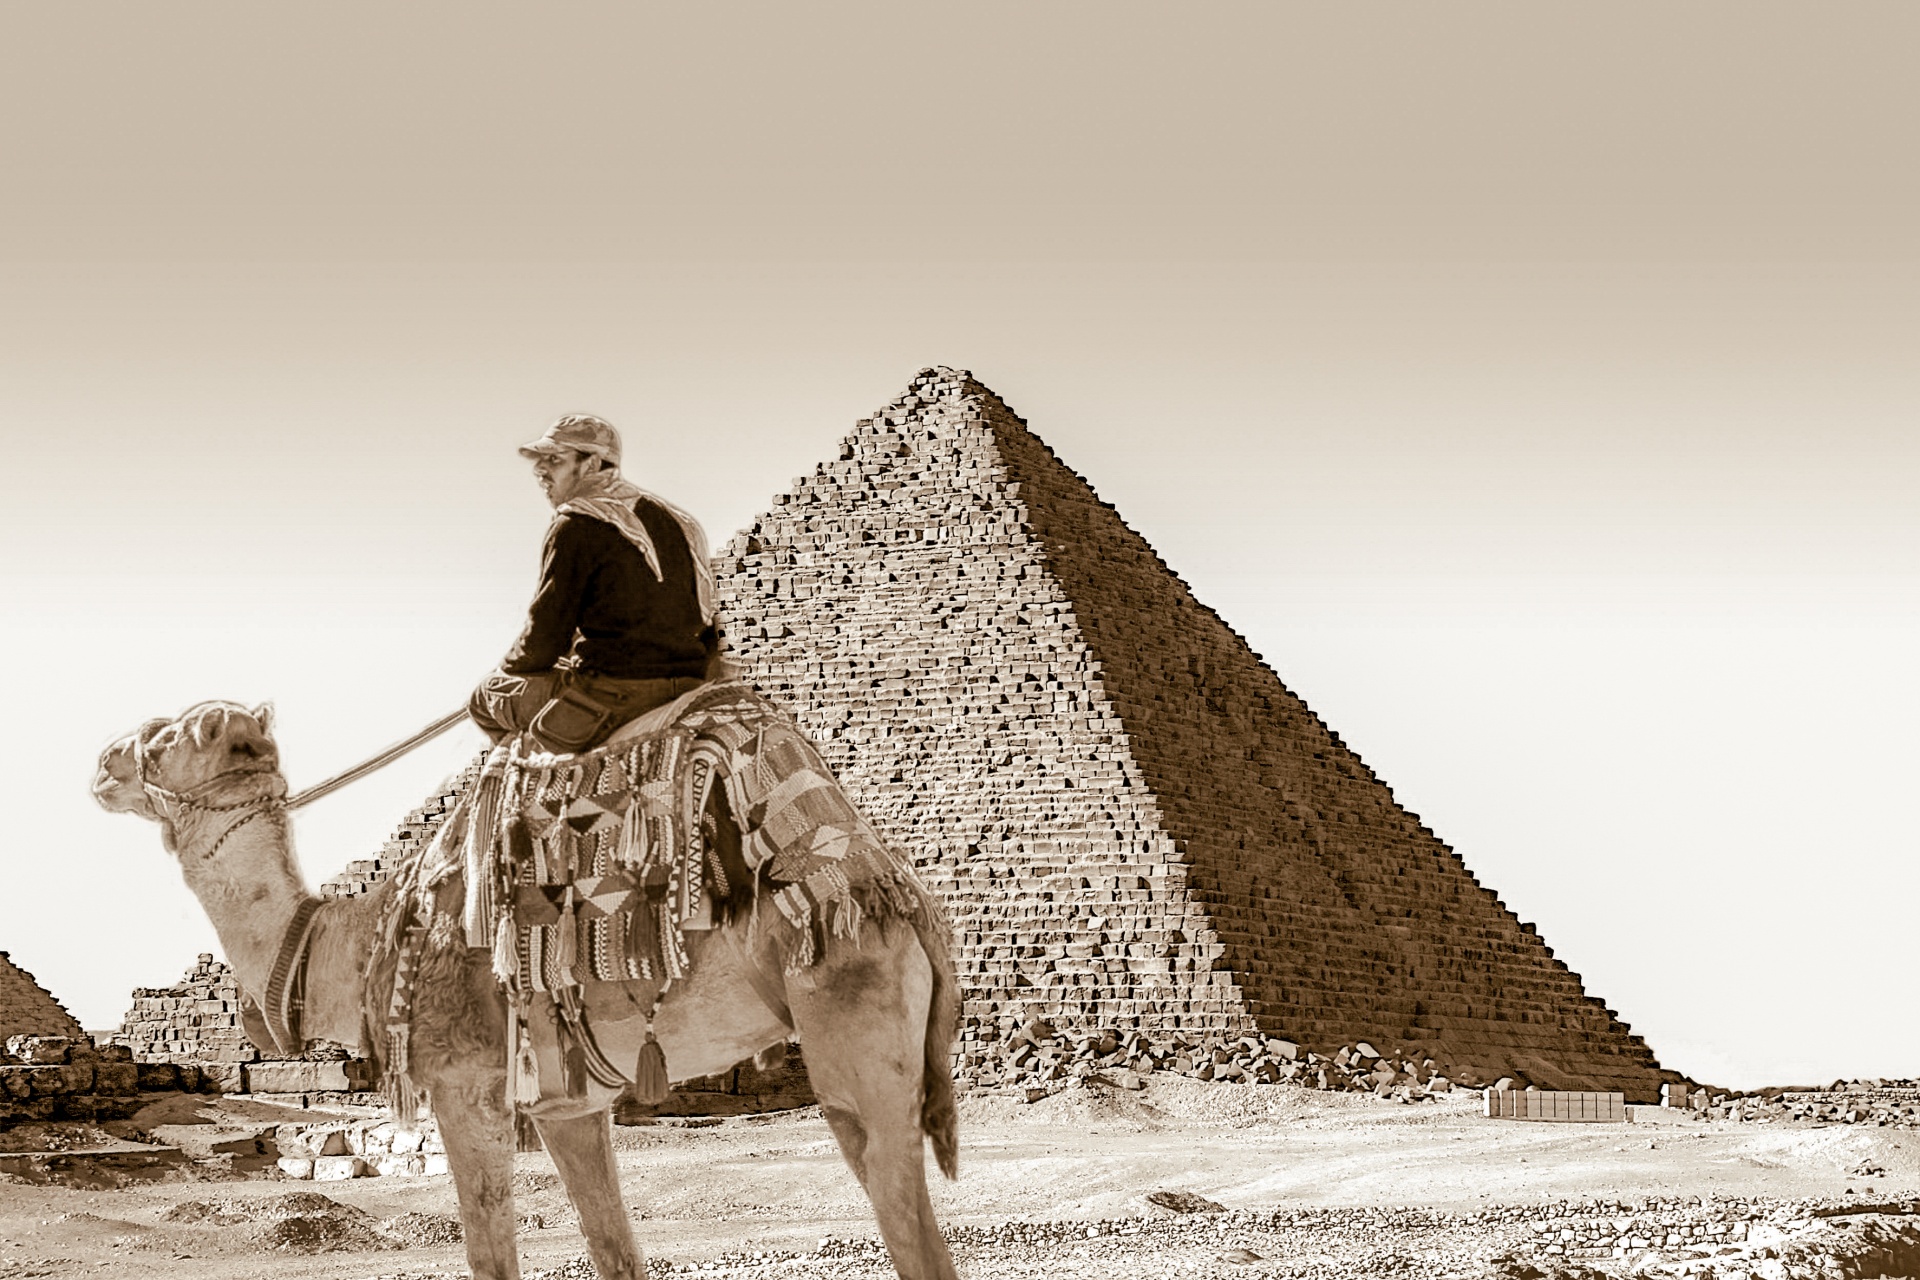 pyramid,egypt,pharaonic,egyptian,tomb,egyptians,desert,cairo,sand,camel,desert,people,tourism, safari, Wonder,big pyramids, traveling, ancient, history,Giza,